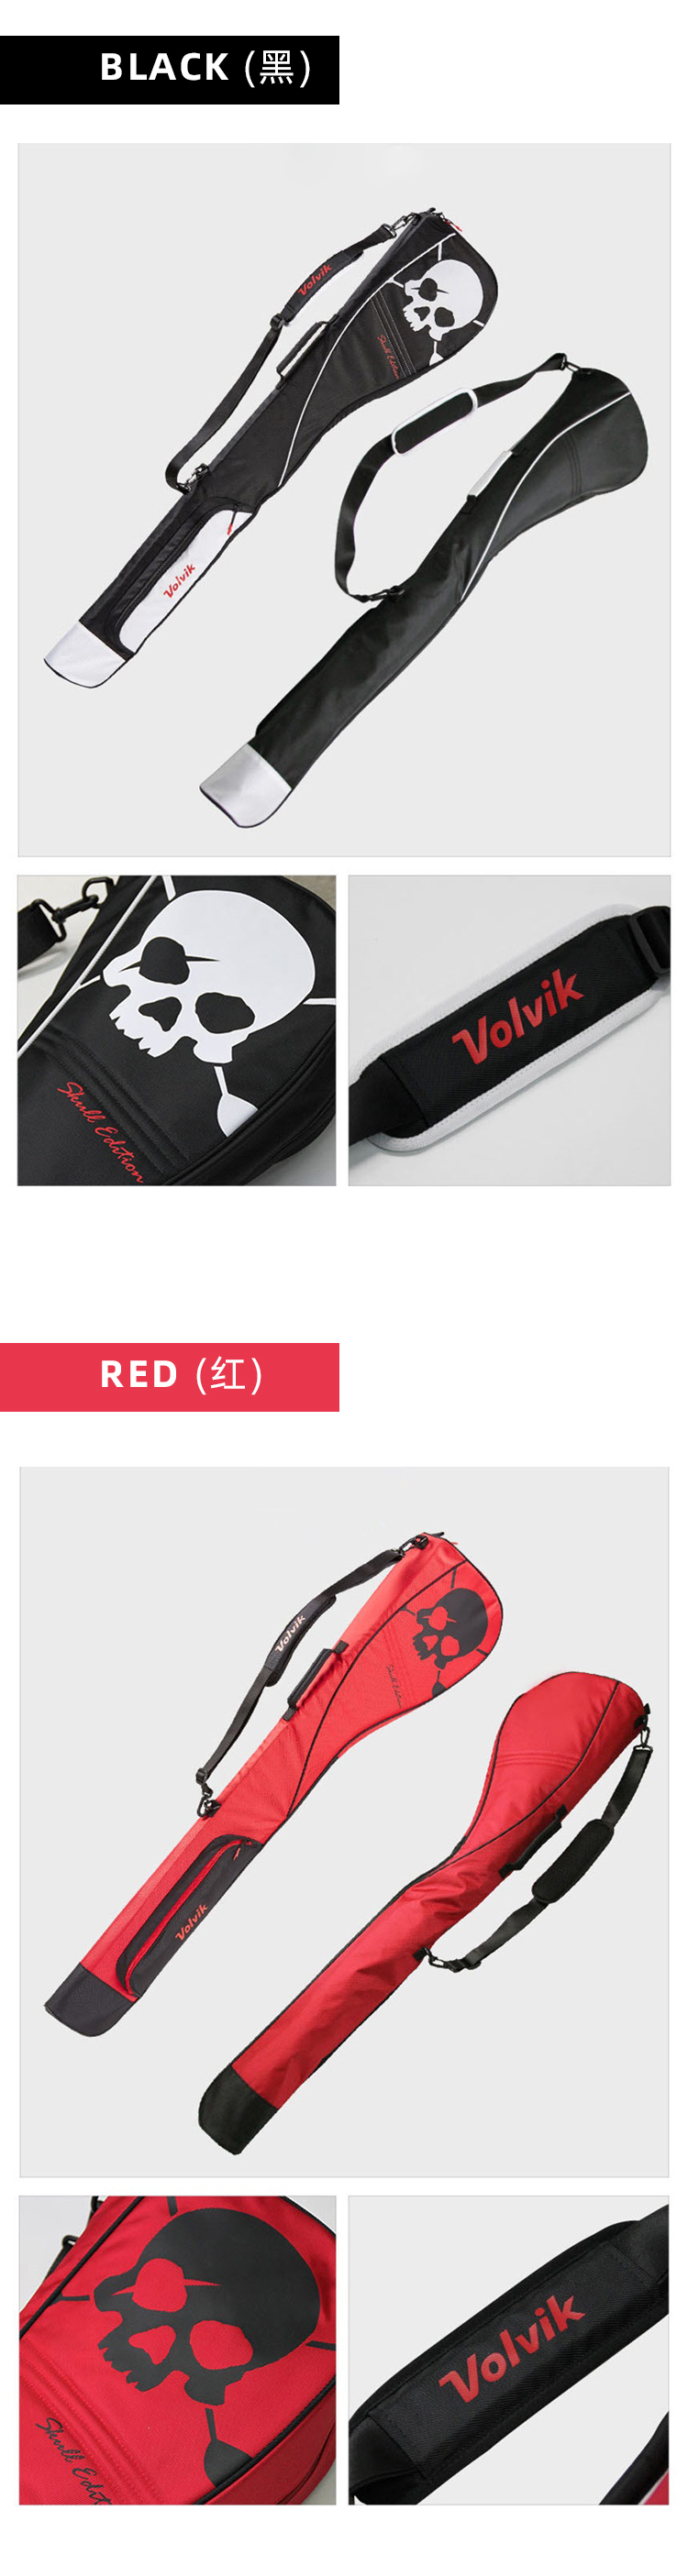 Volvik沃维克高尔夫用品球杆包多功能专业golf装备黑/红骷髅款